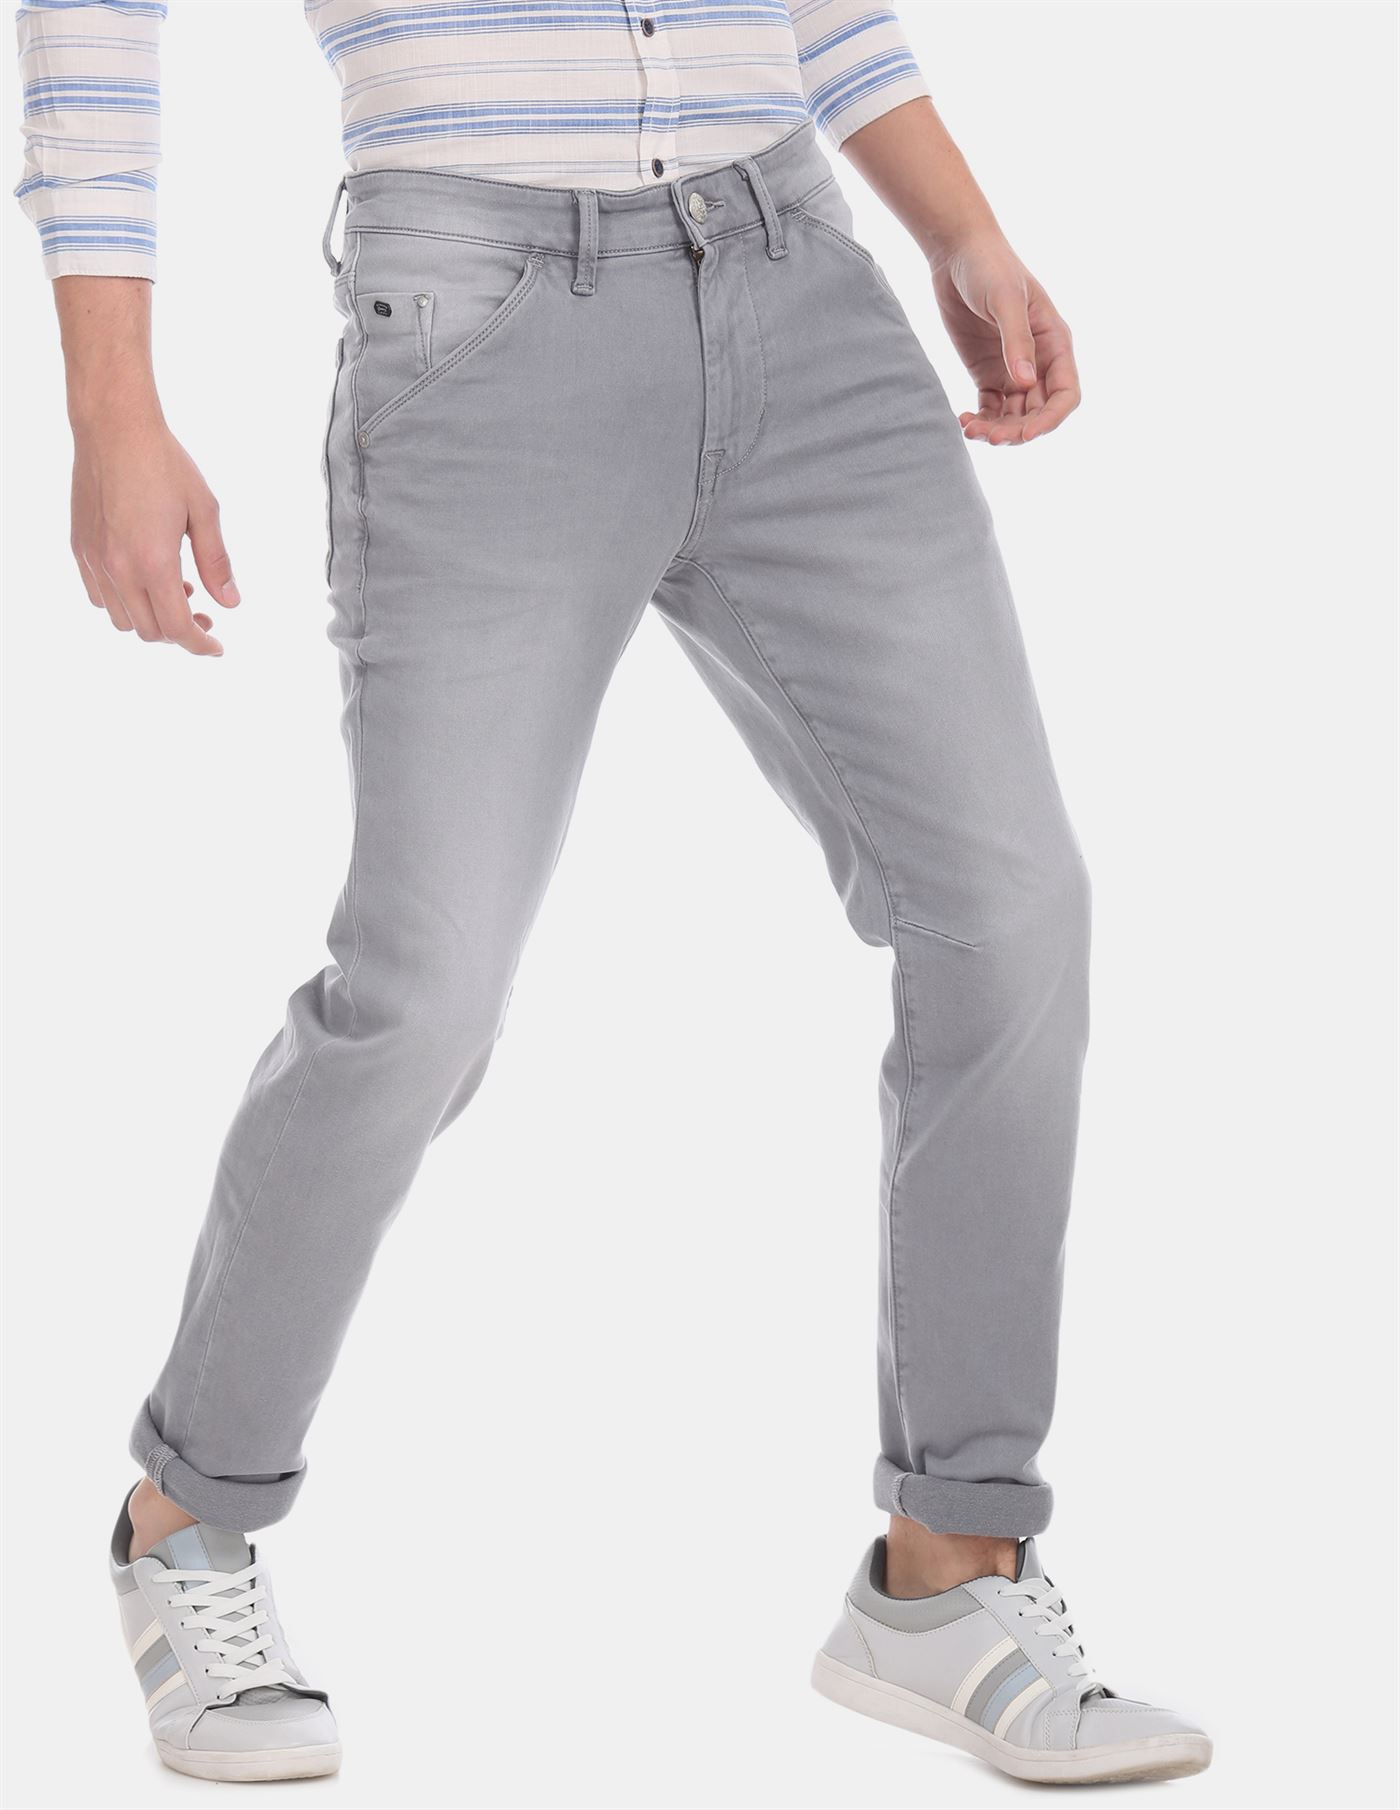 Buy V2 VALUE & VARIETY Men Jeans (Light Grey)-1112038772007 at Amazon.in